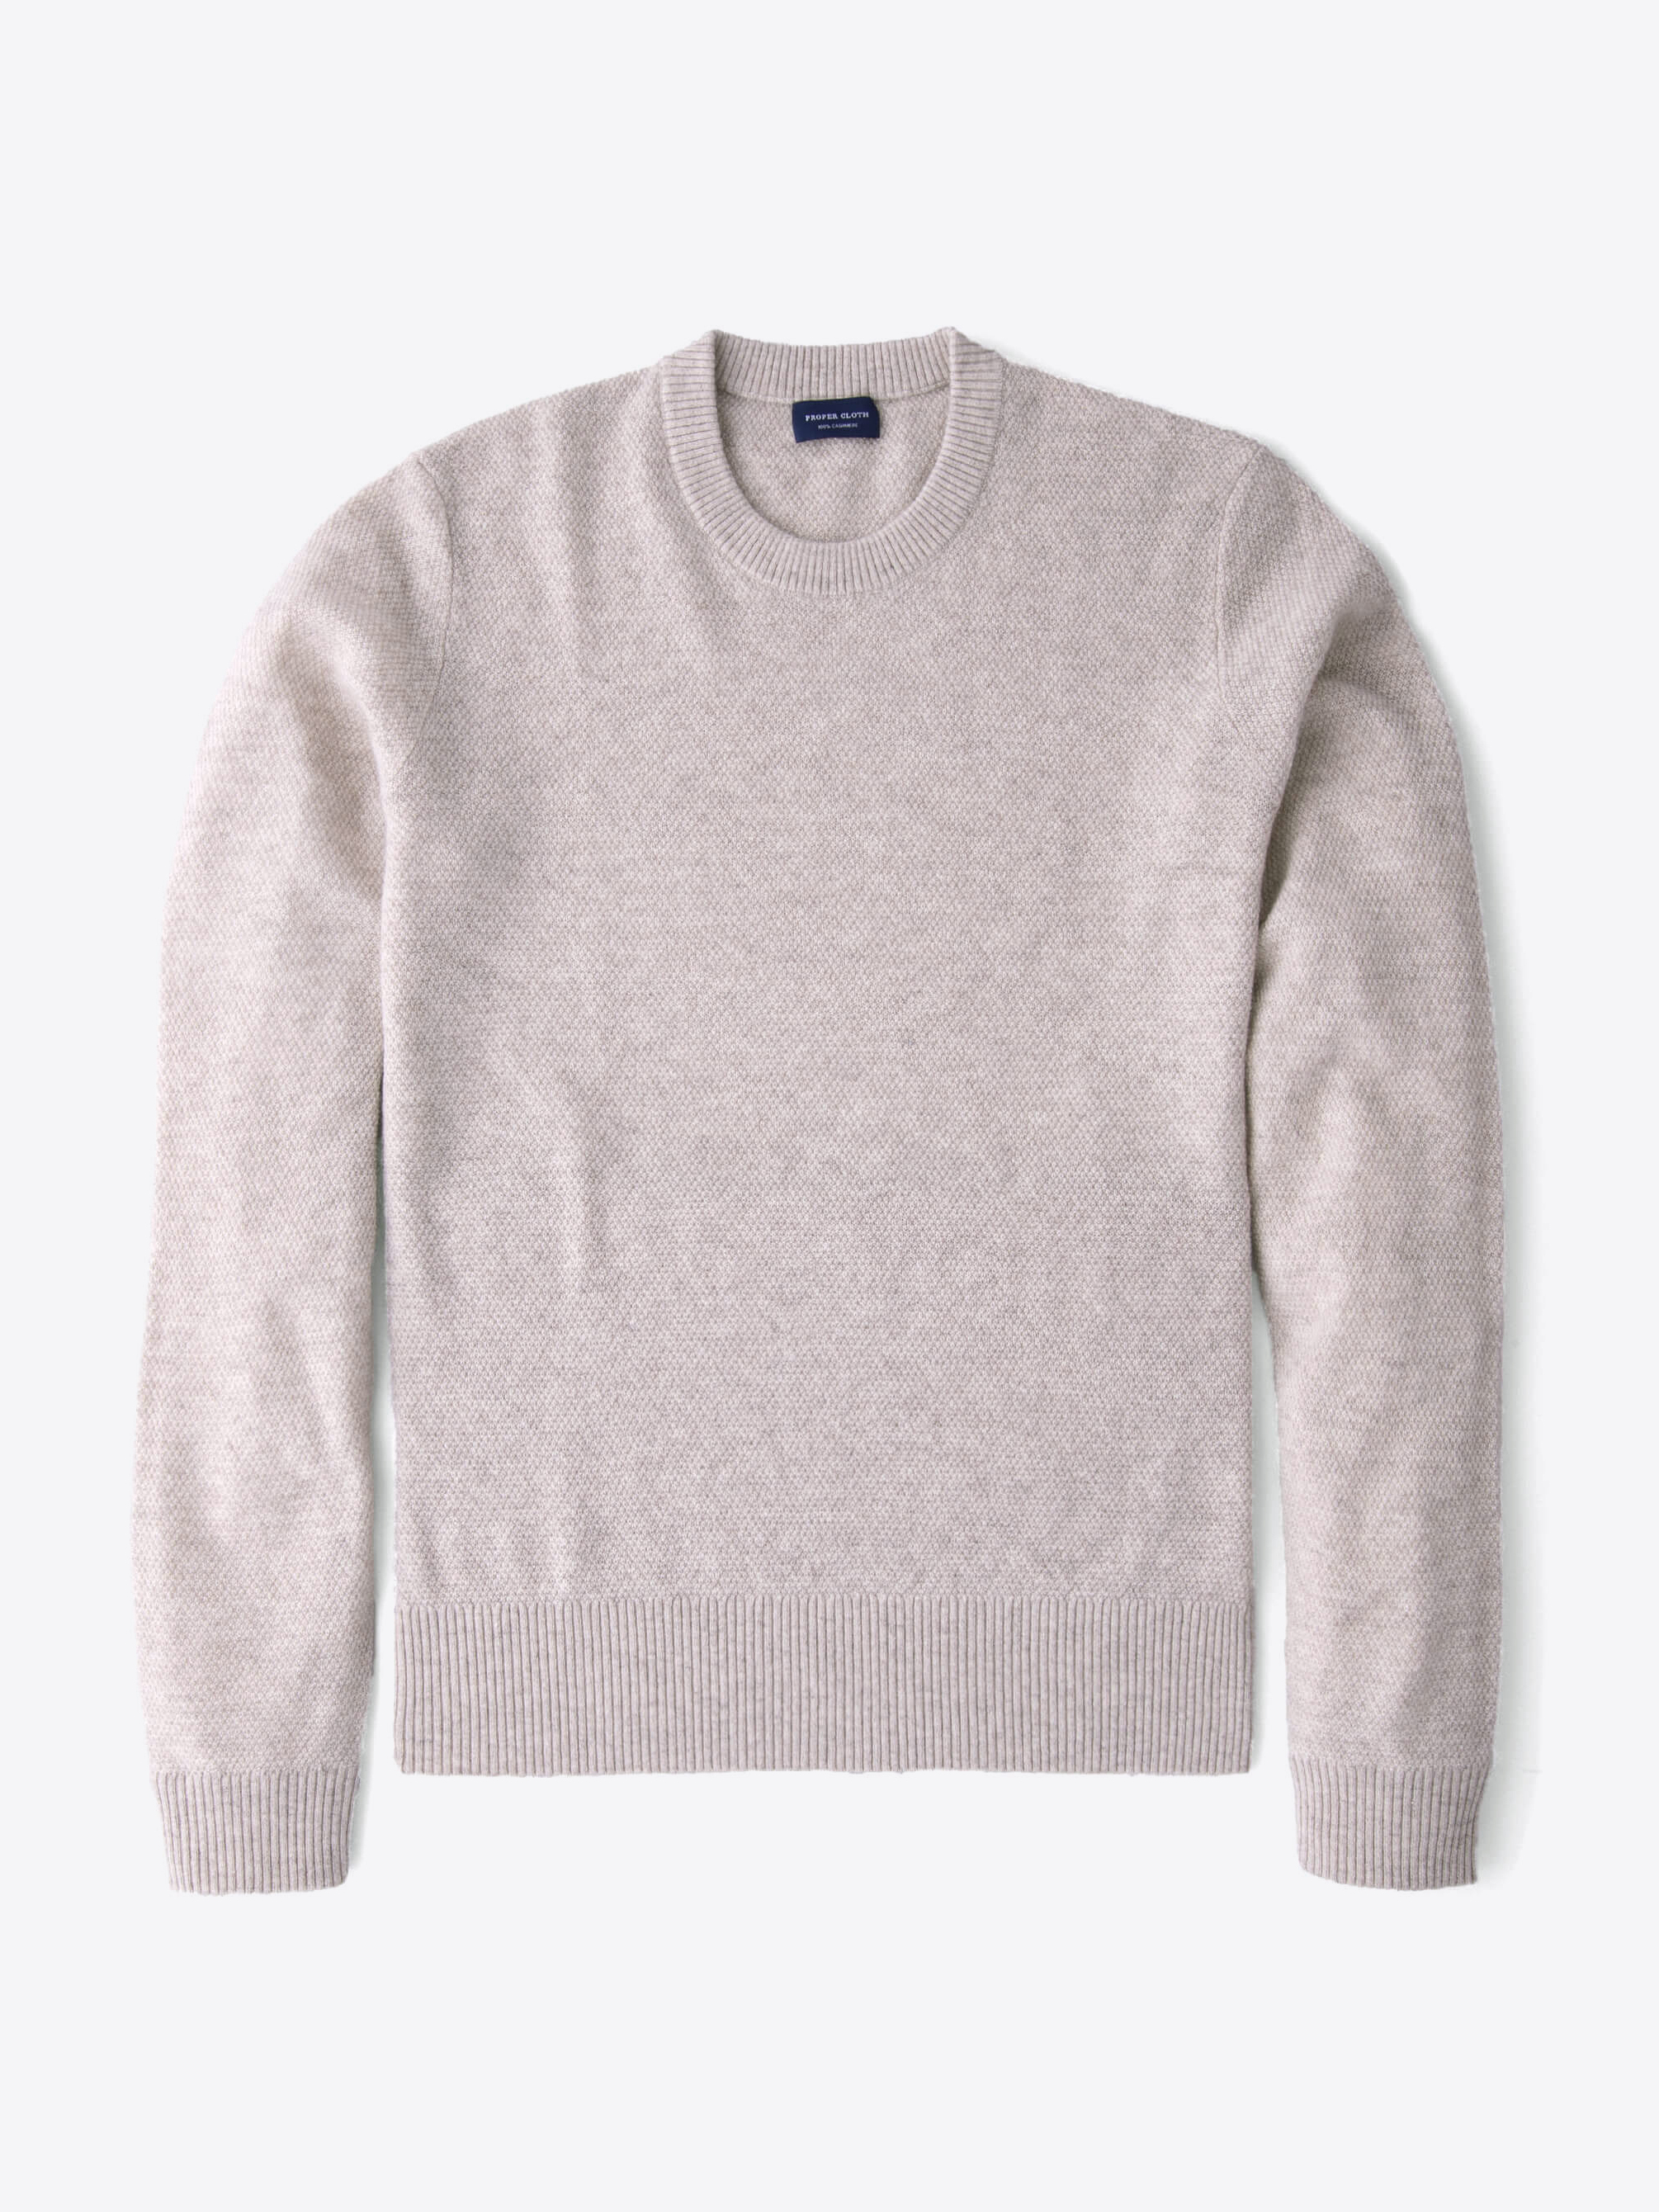 Zoom Image of Wheat Cobble Stitch Cashmere Crewneck Sweater